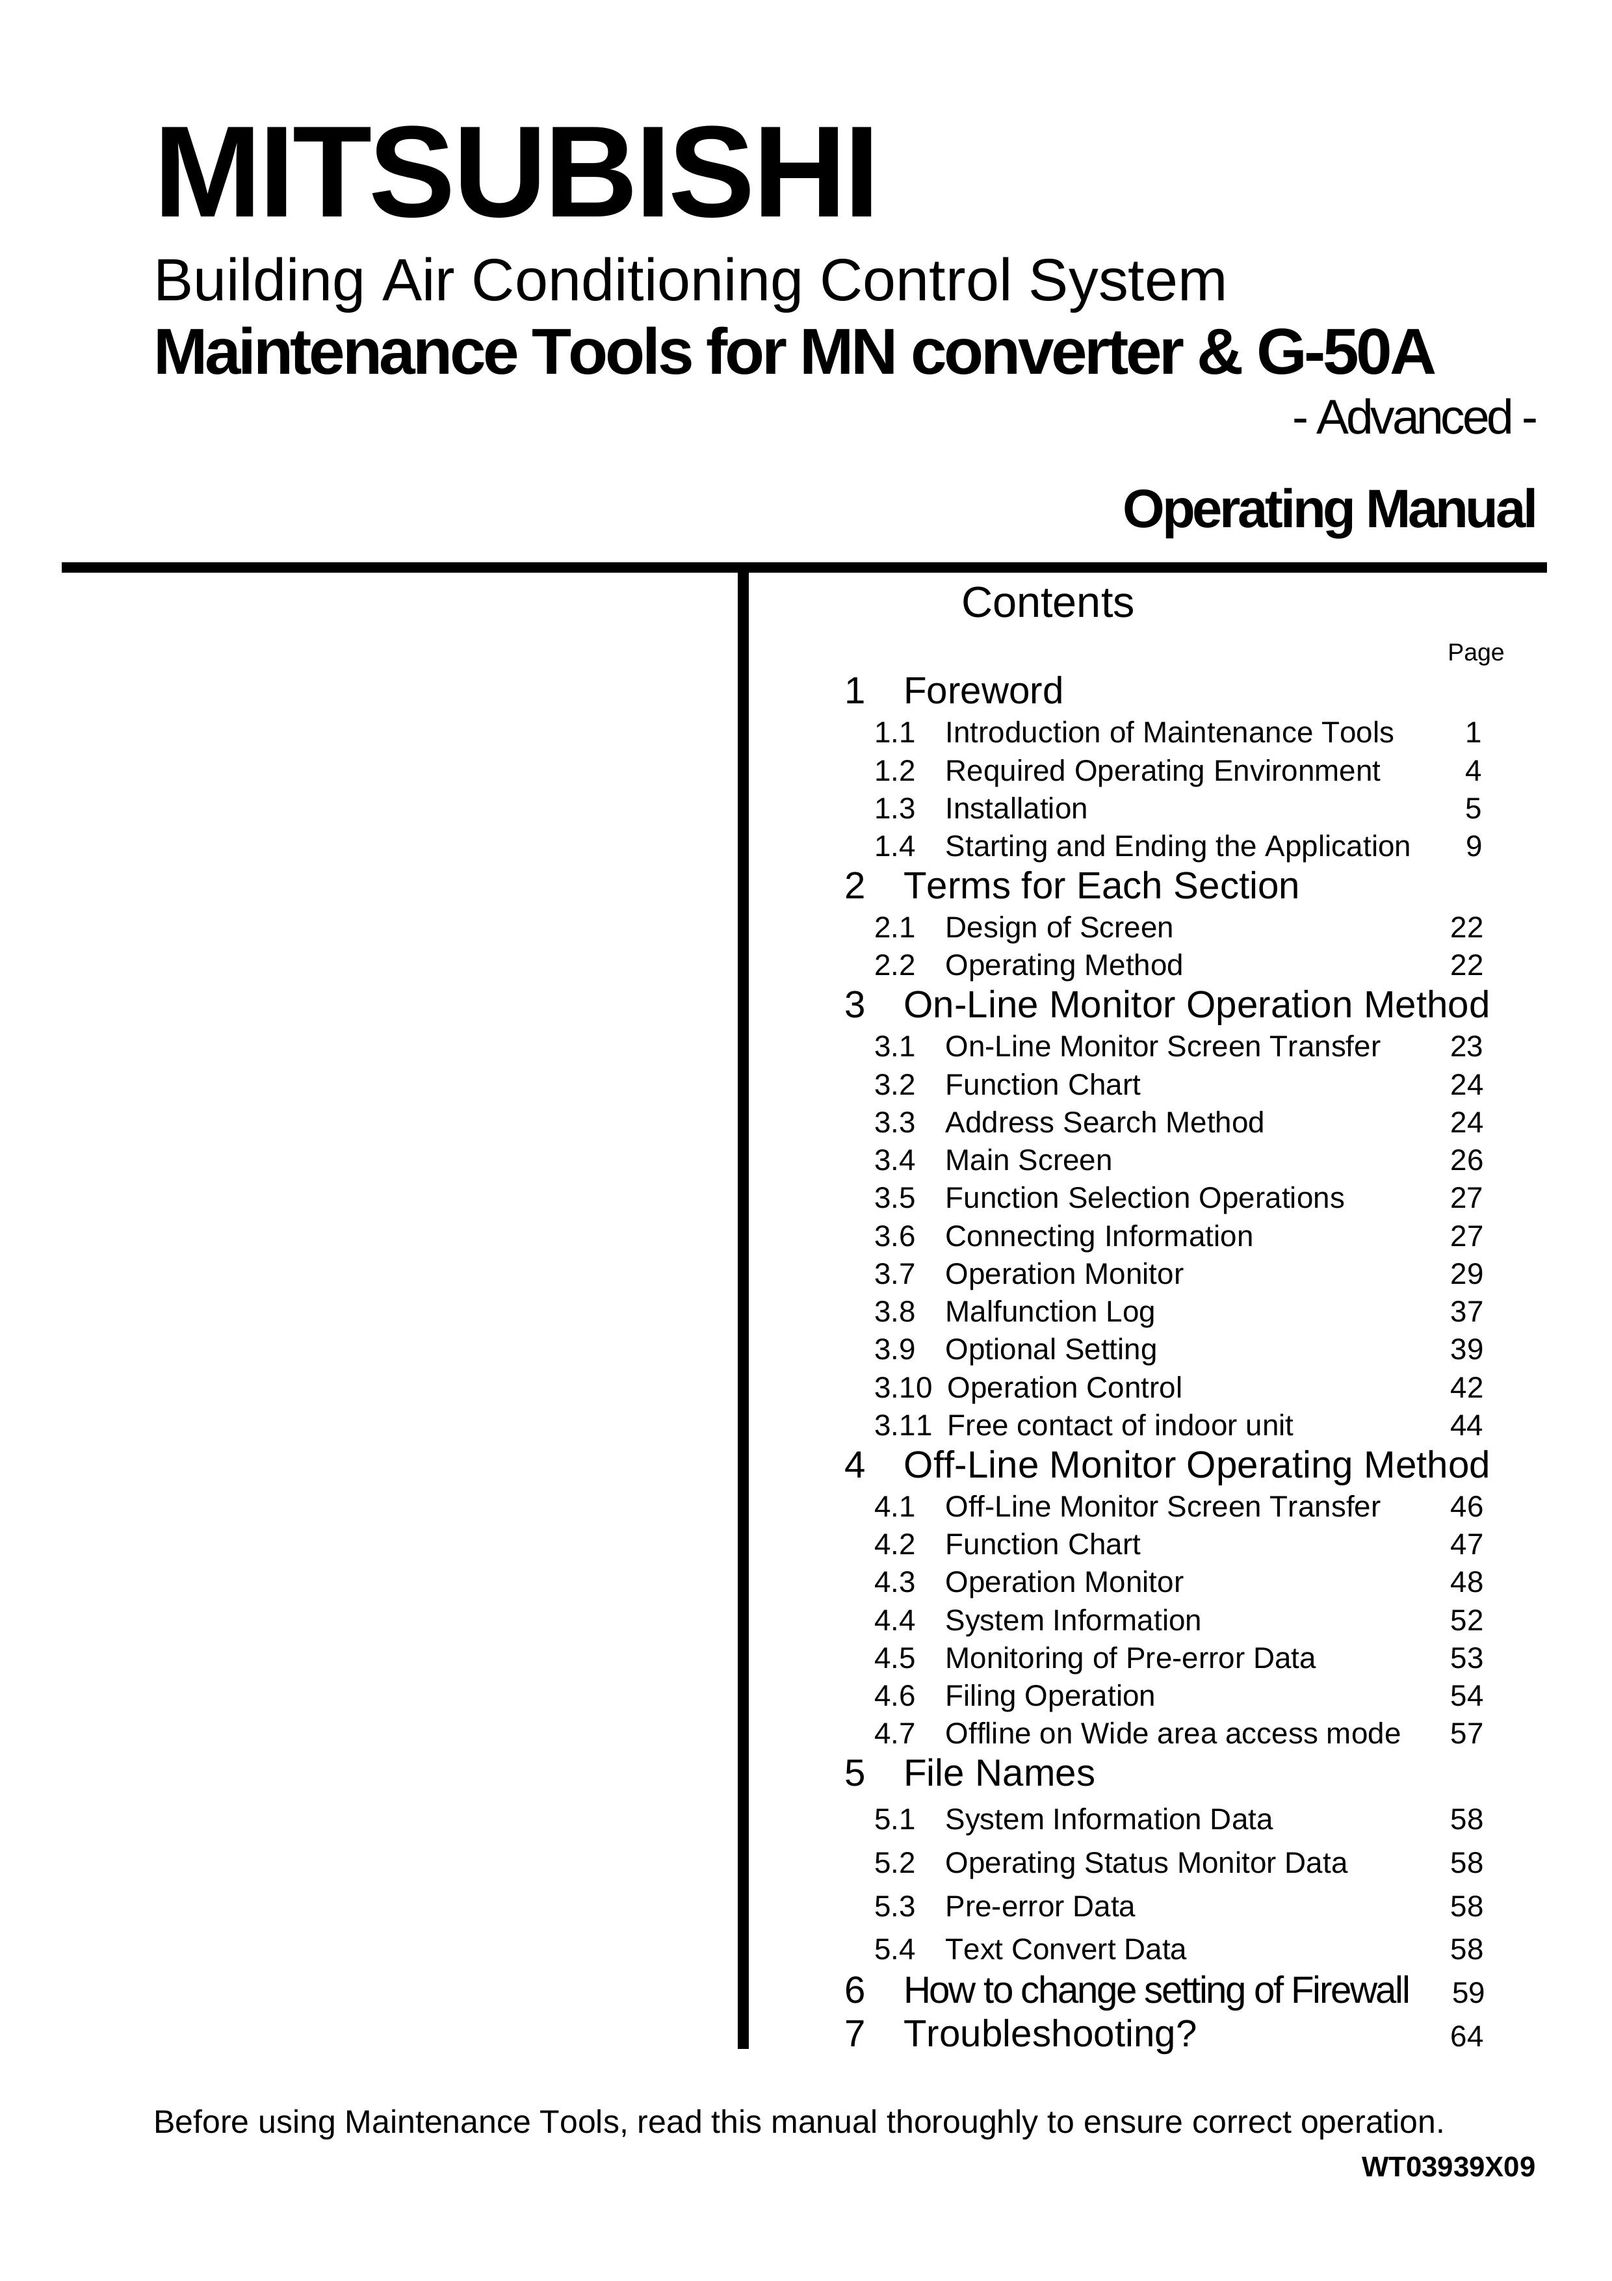 Mitsubishi MN Converter Air Conditioner User Manual